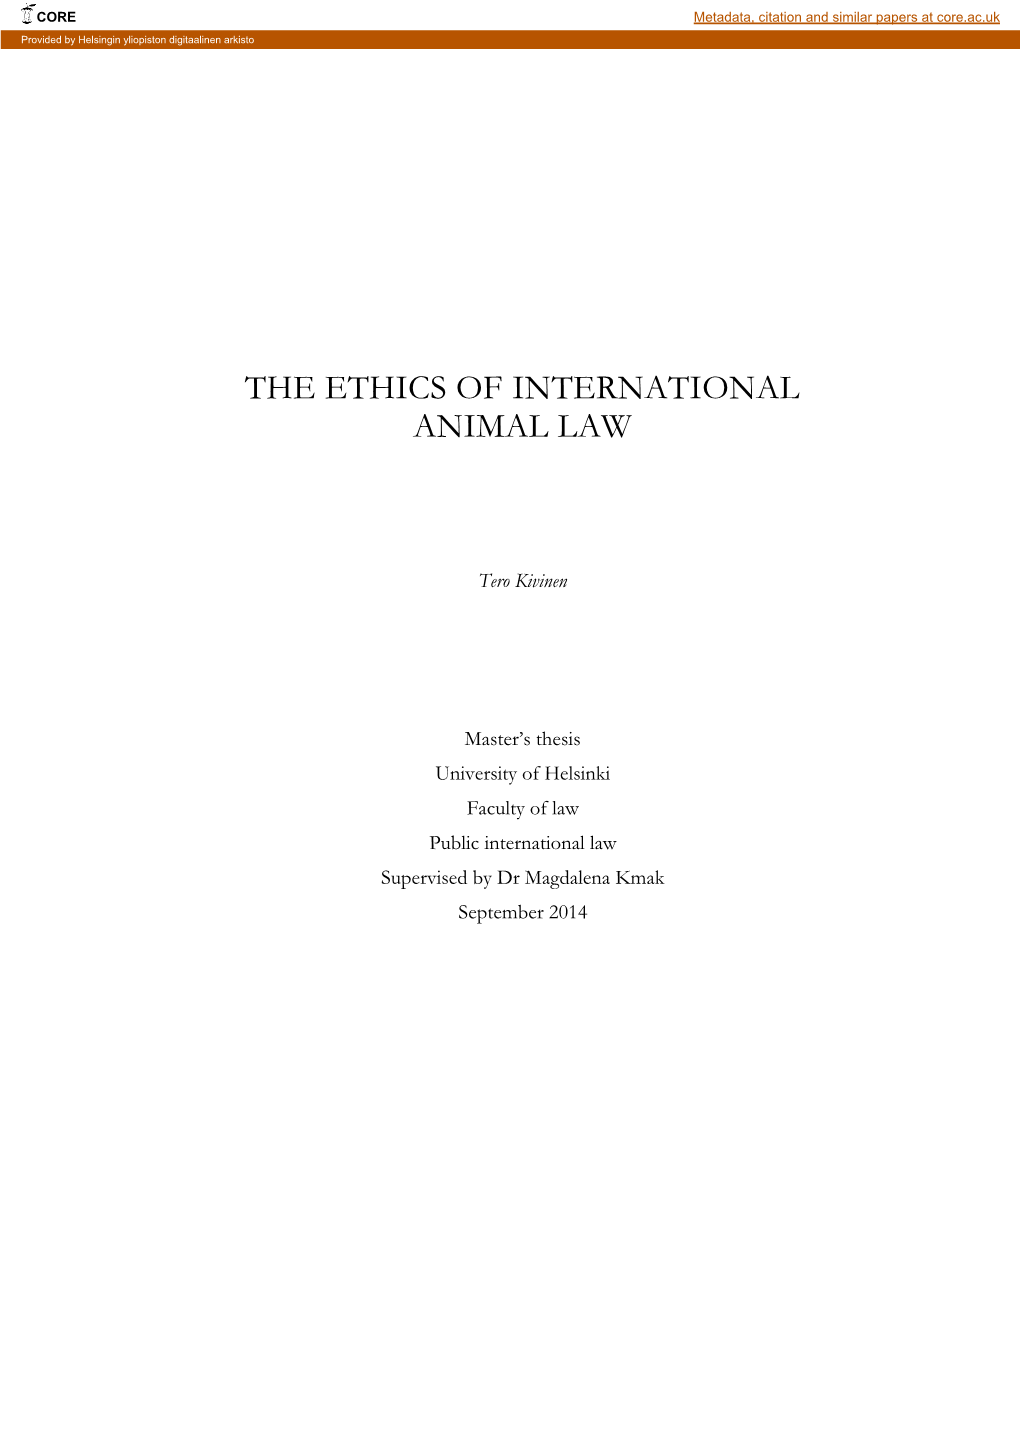 The Ethics of International Animal Law